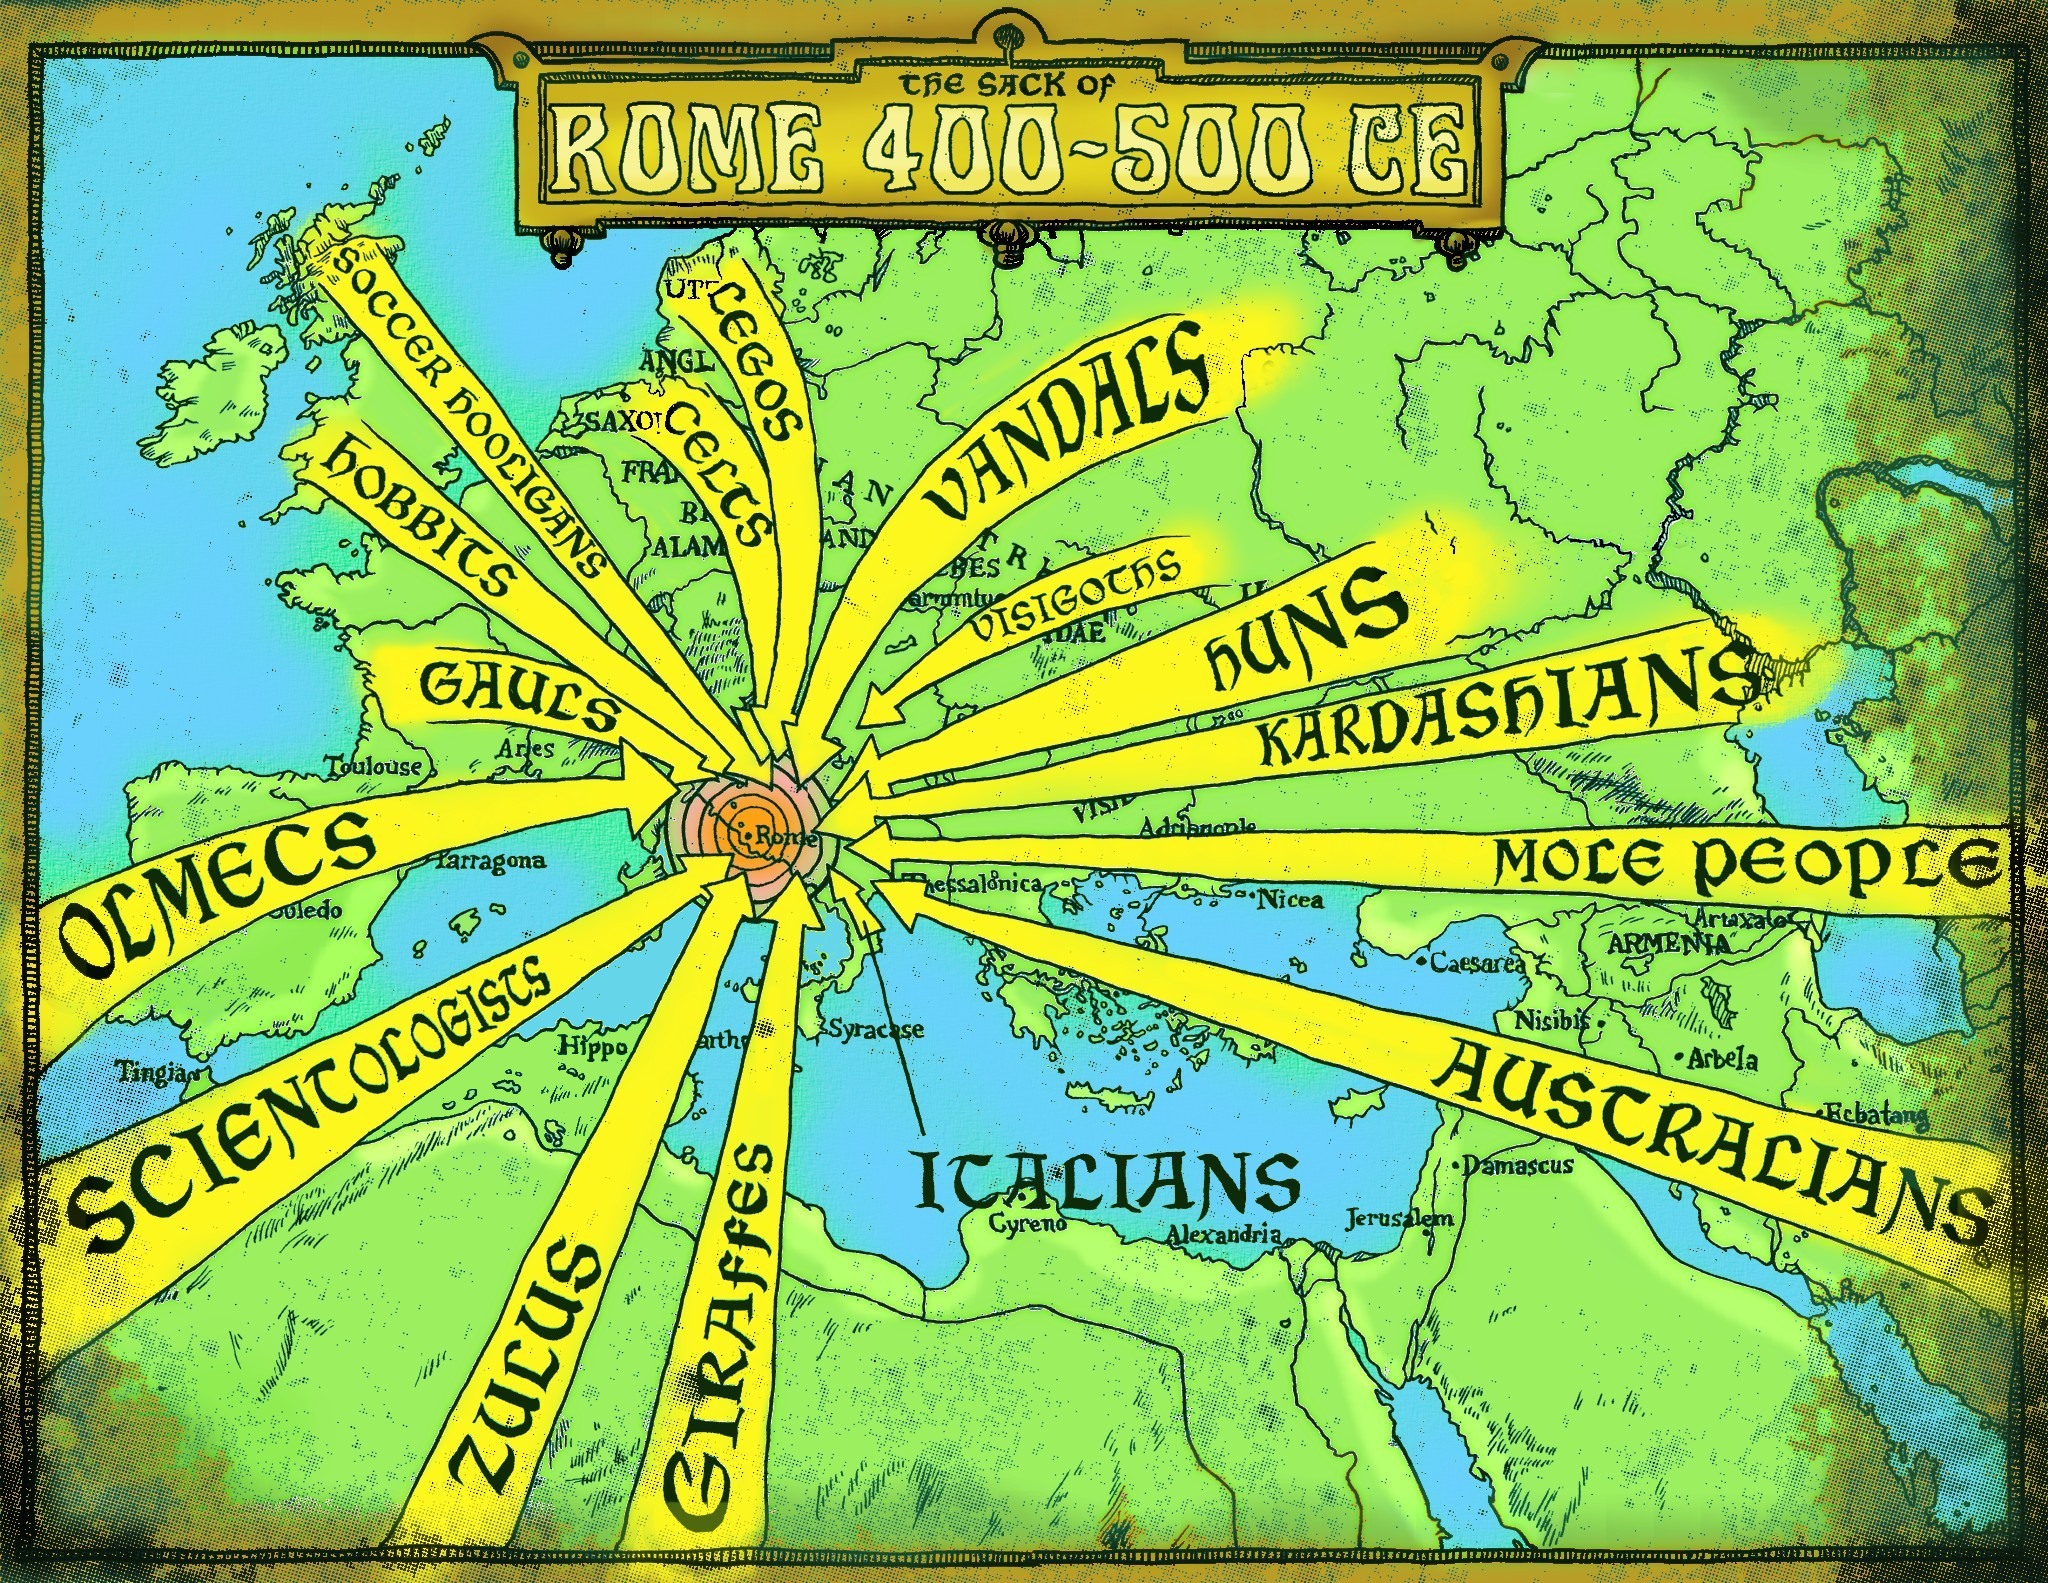 Conquest of Rome, 400-500 CE